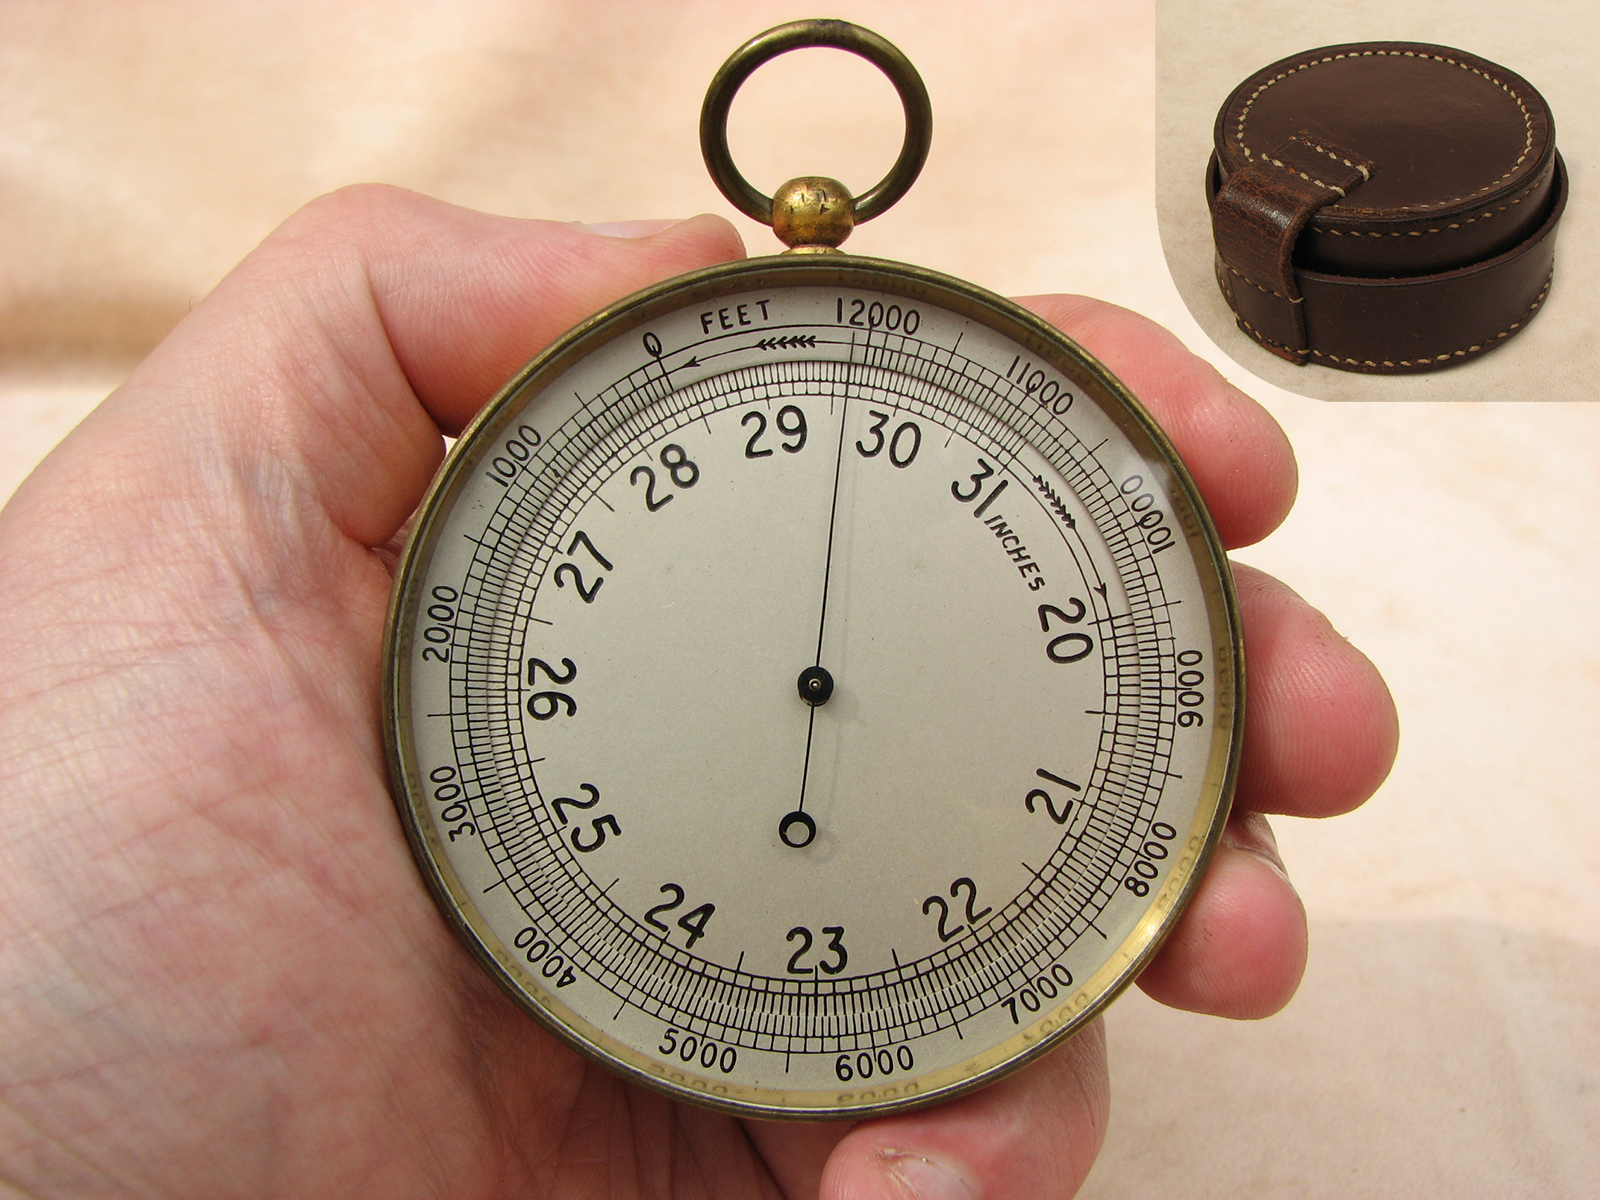 1930s Air Ministry MK I aneroid pocket barometer & altimeter by T Wheeler